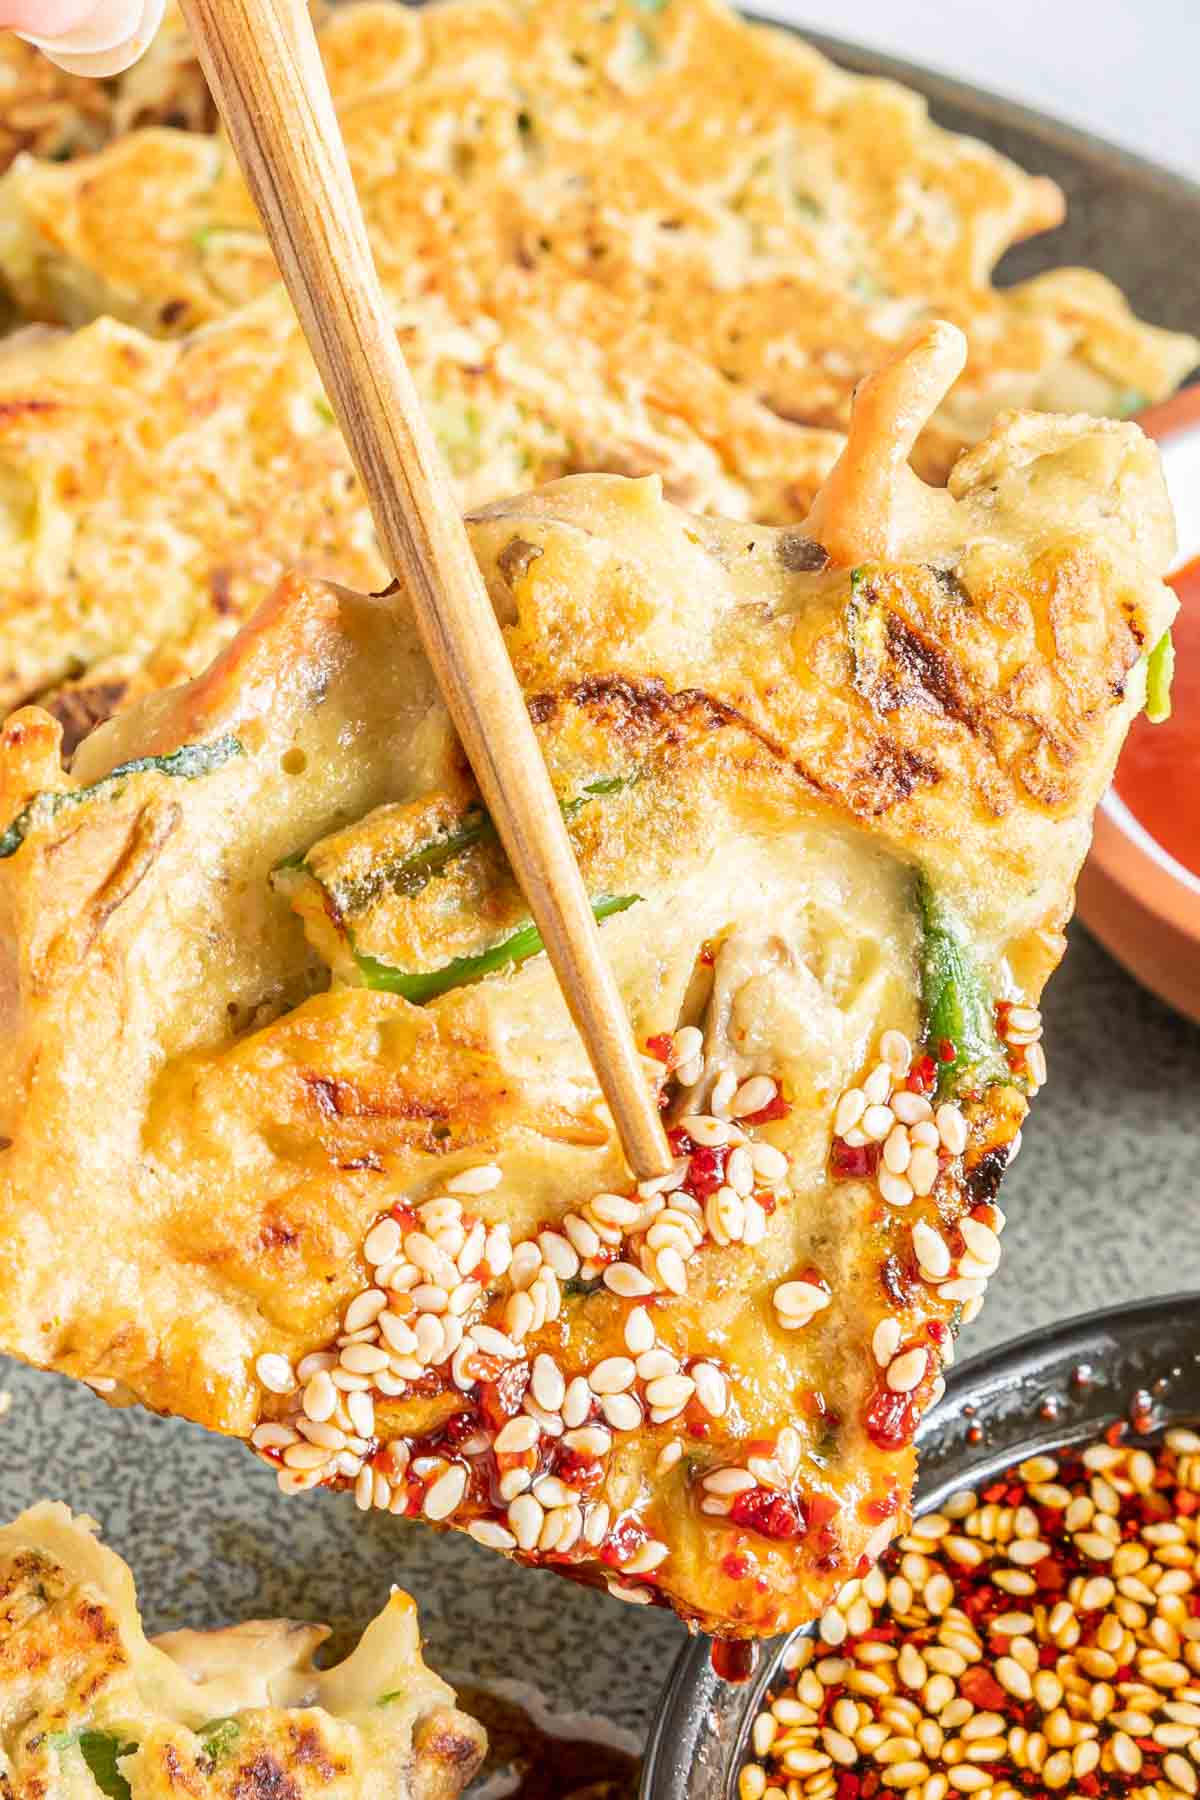 Chopsticks holding a vegetable pancake dipped in Korean dipping sauce.